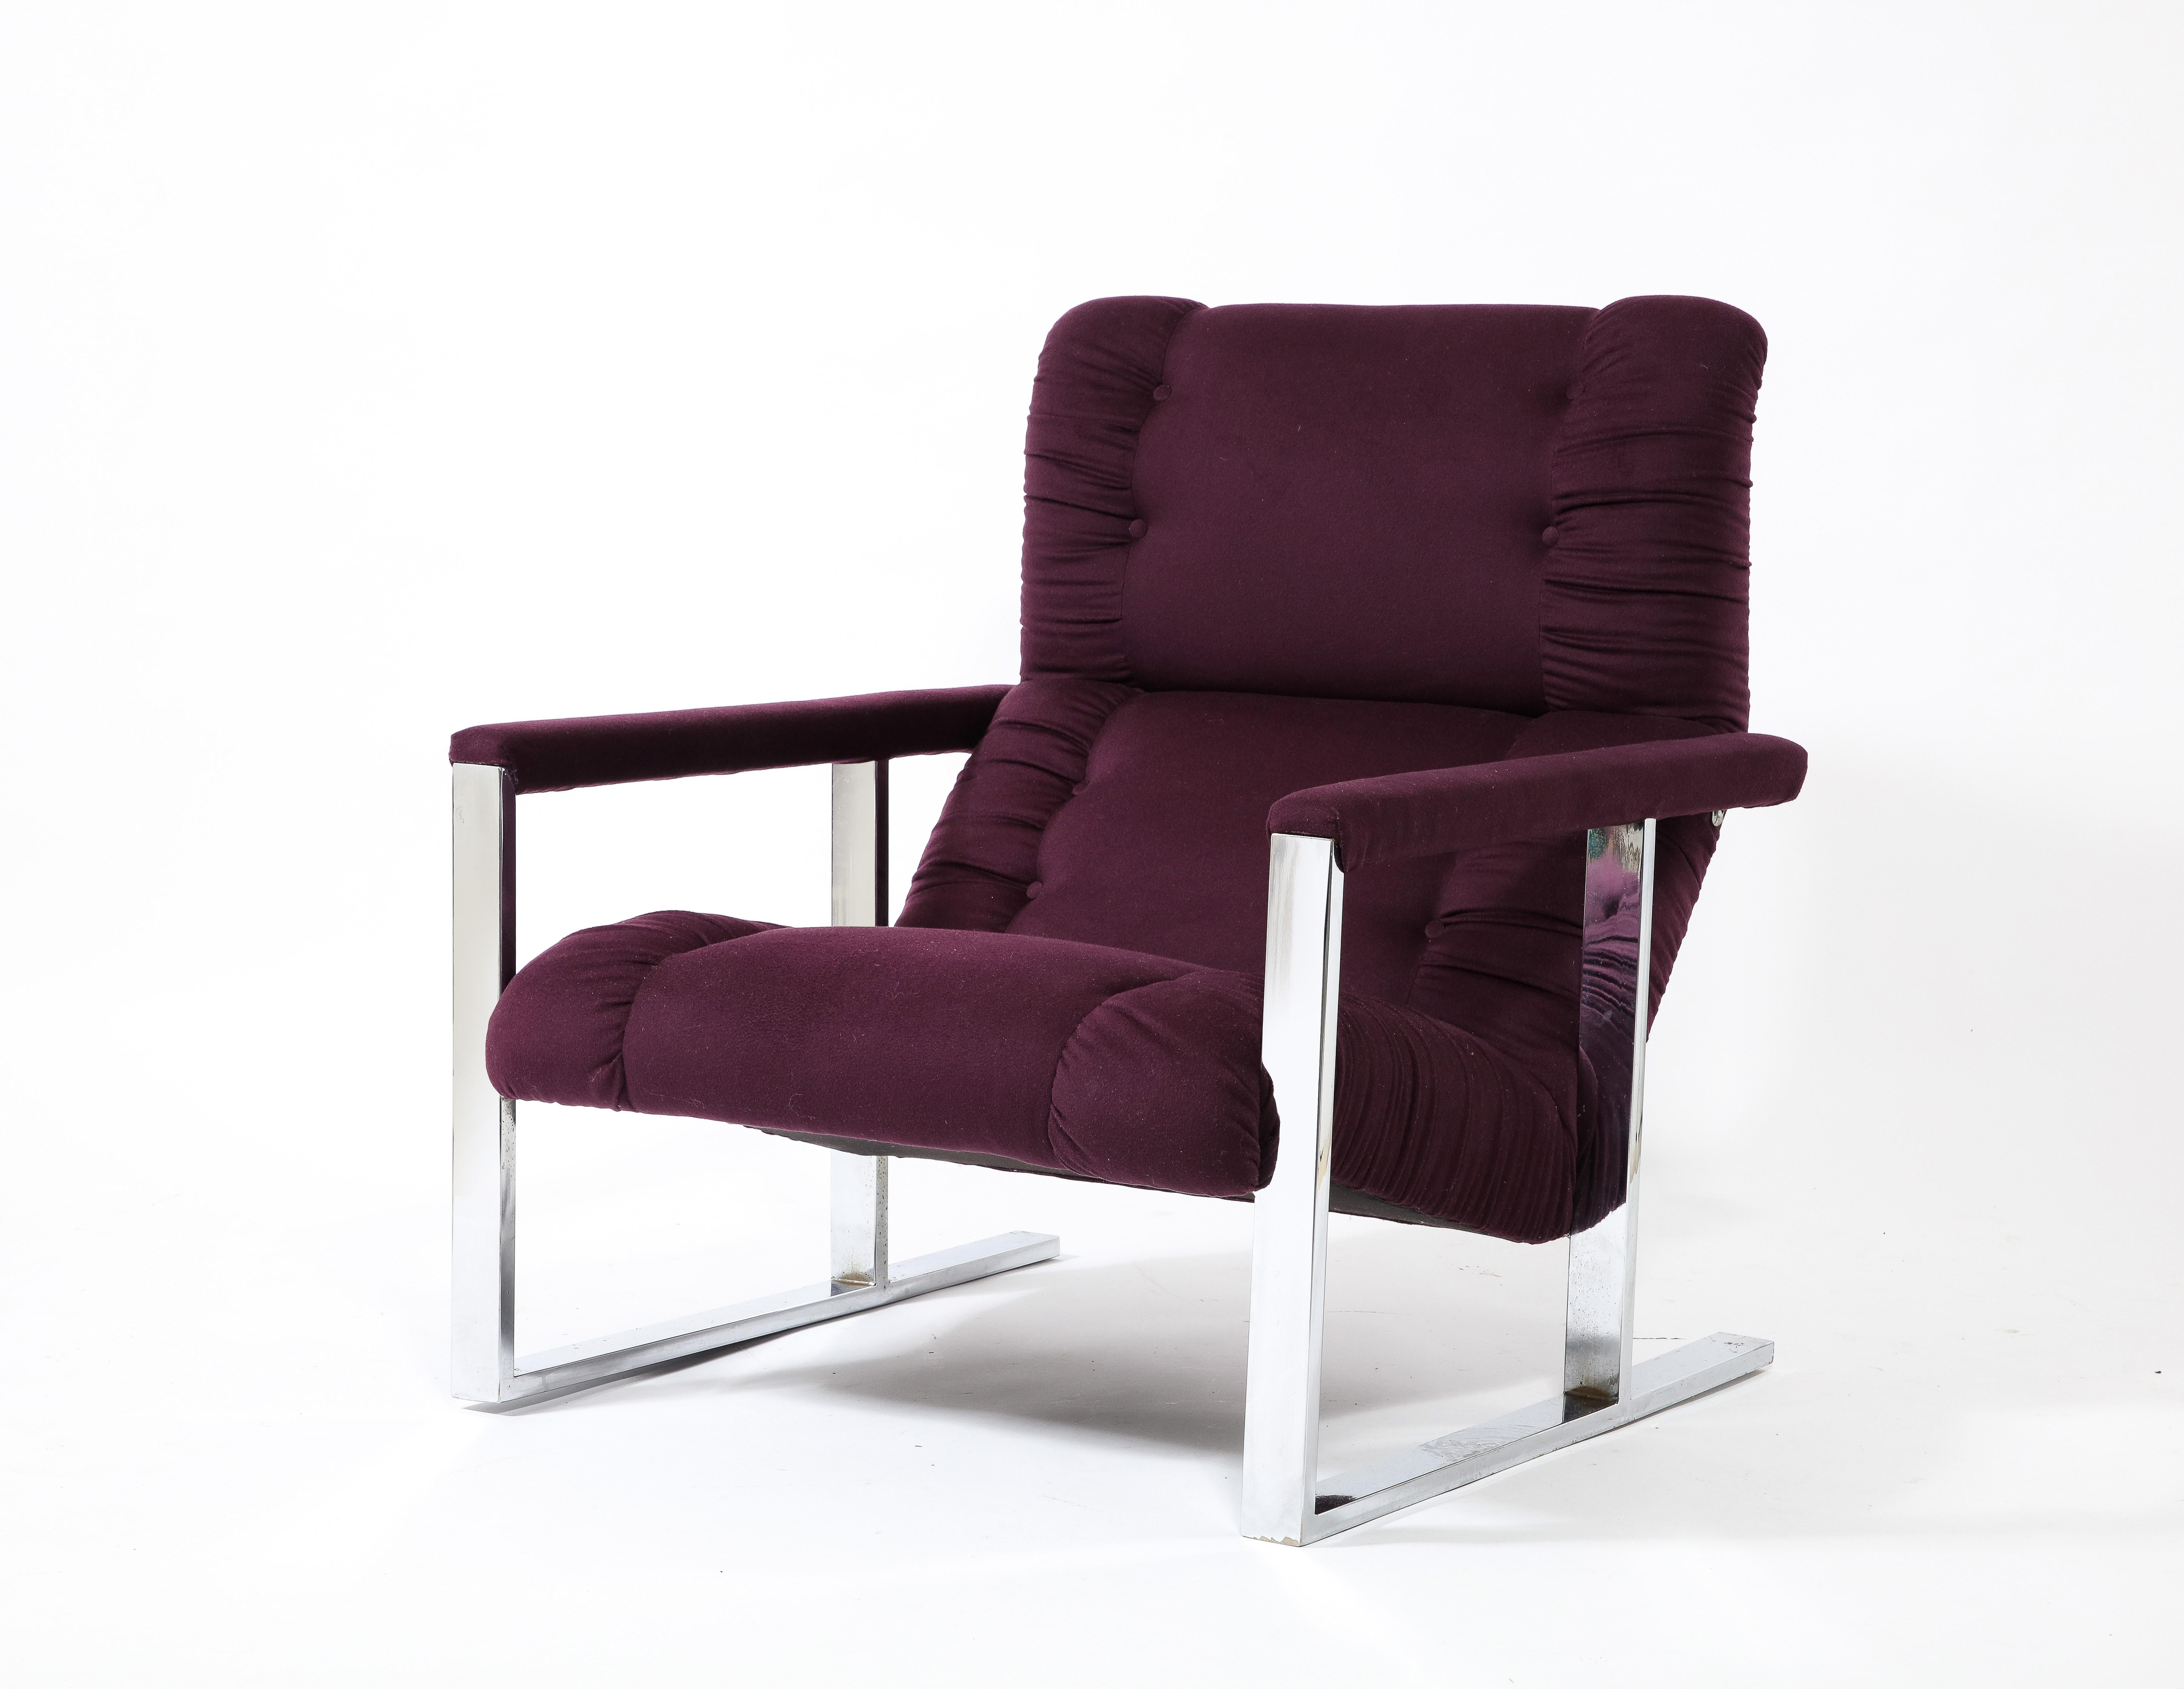 Modernist Angular Chrome Lounge Chair & Ottoman in Aubergine Wool, USA 1970's For Sale 3